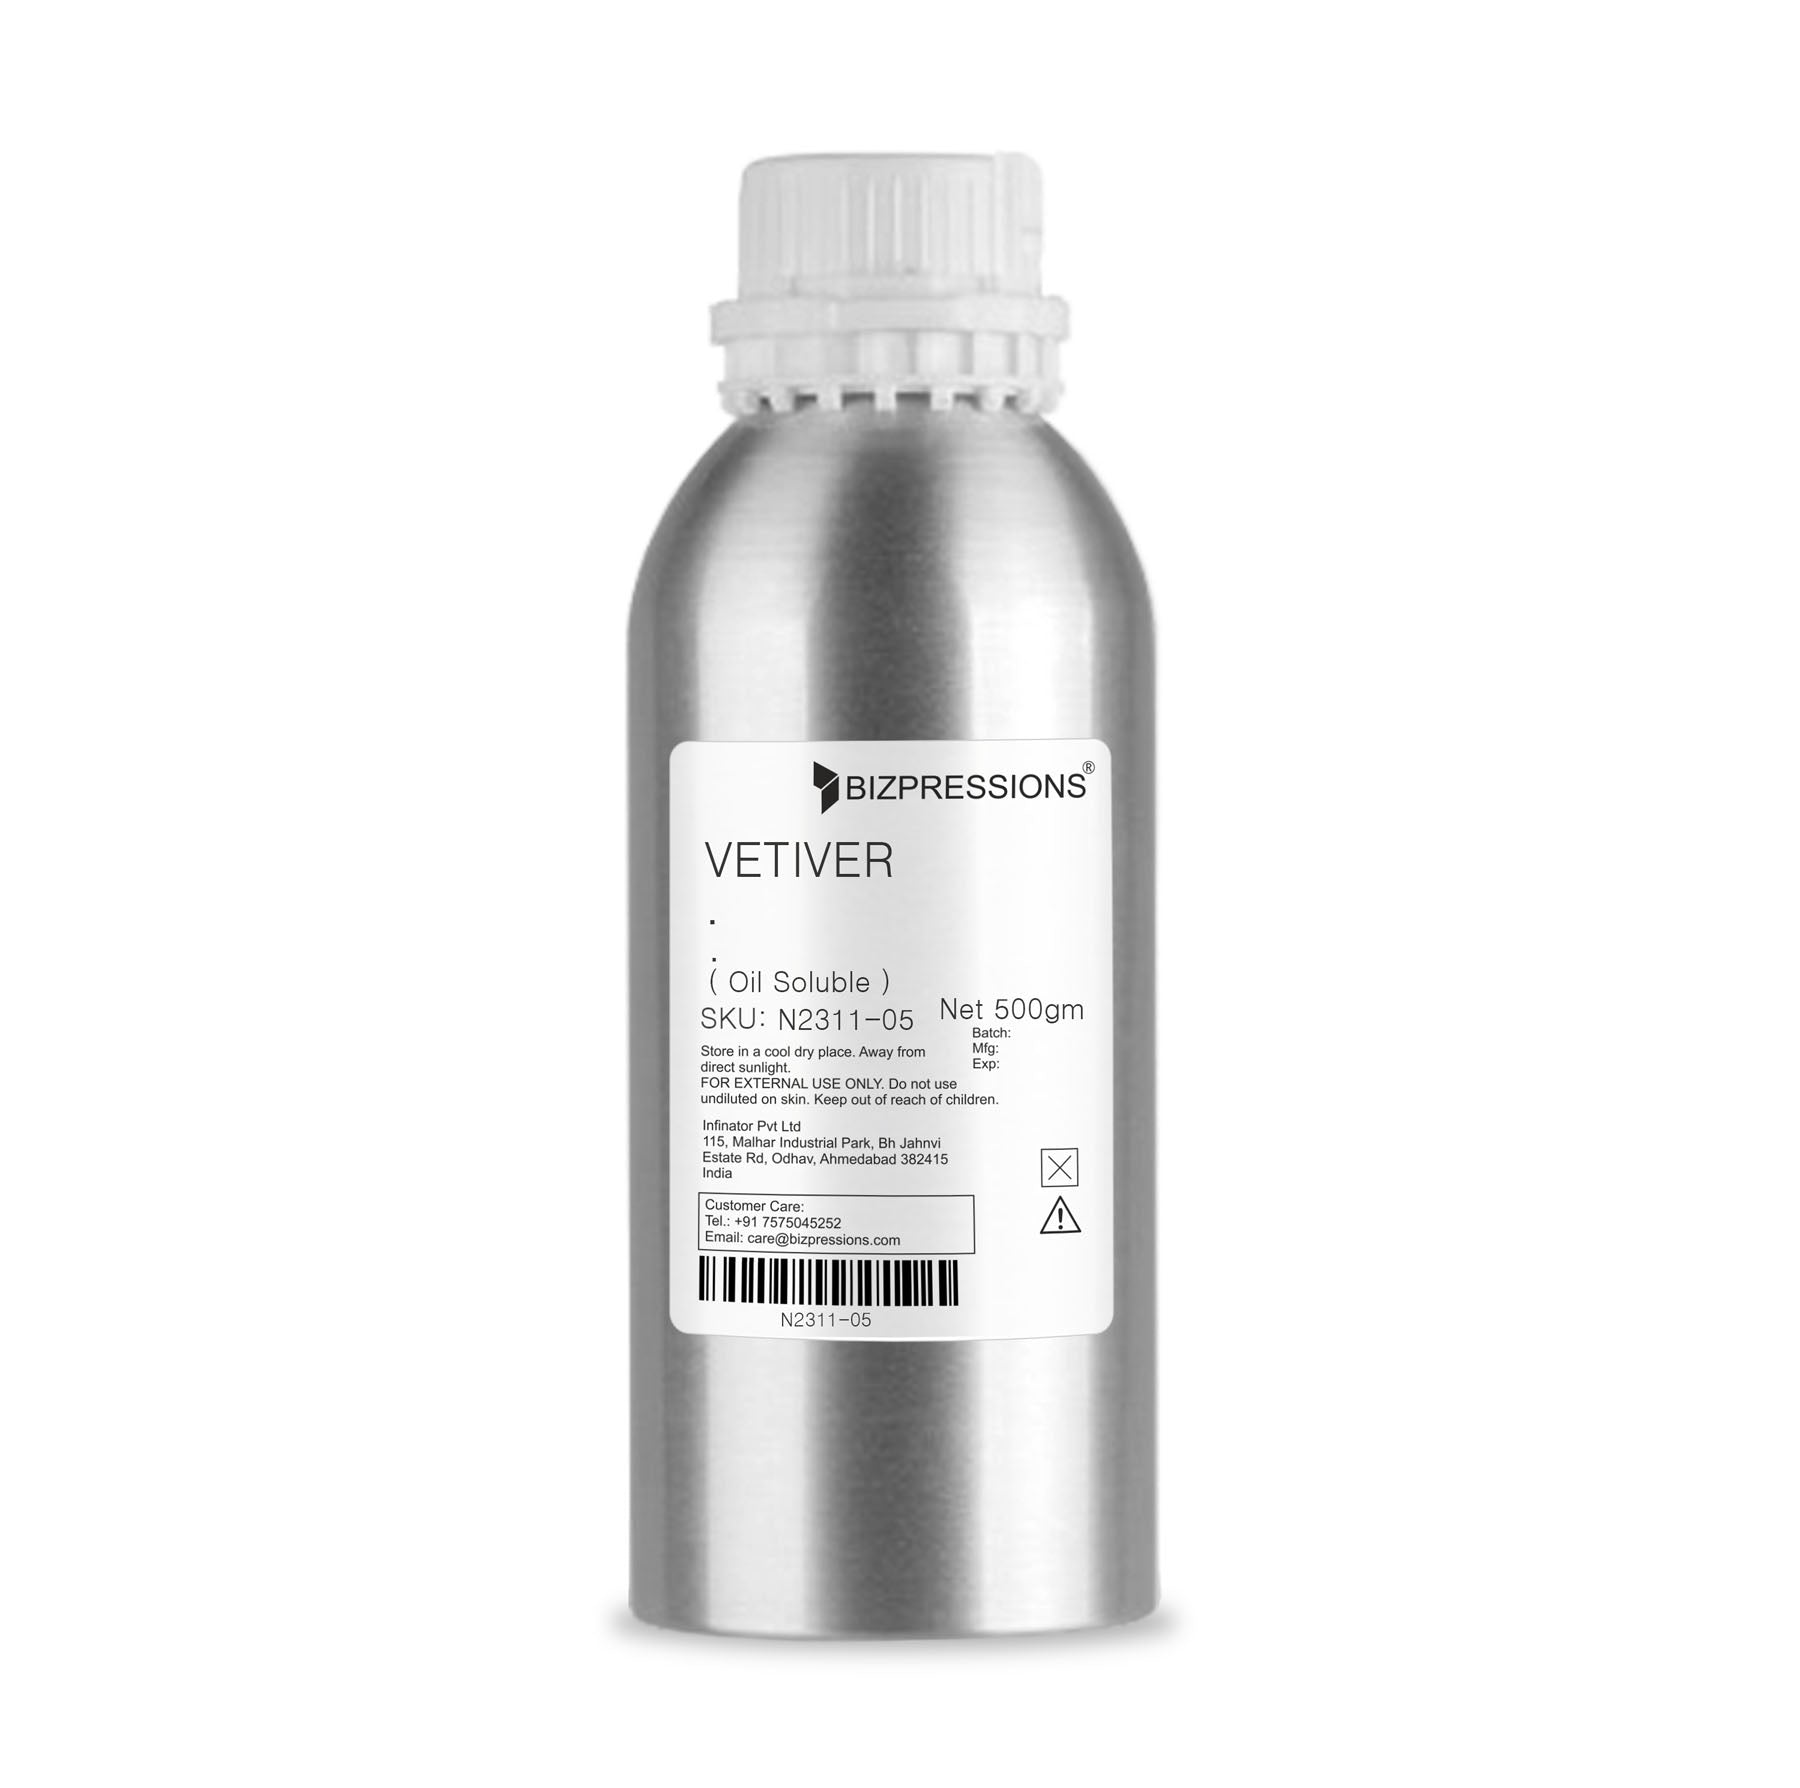 VETIVER - Fragrance ( Oil Soluble ) - 500 gm